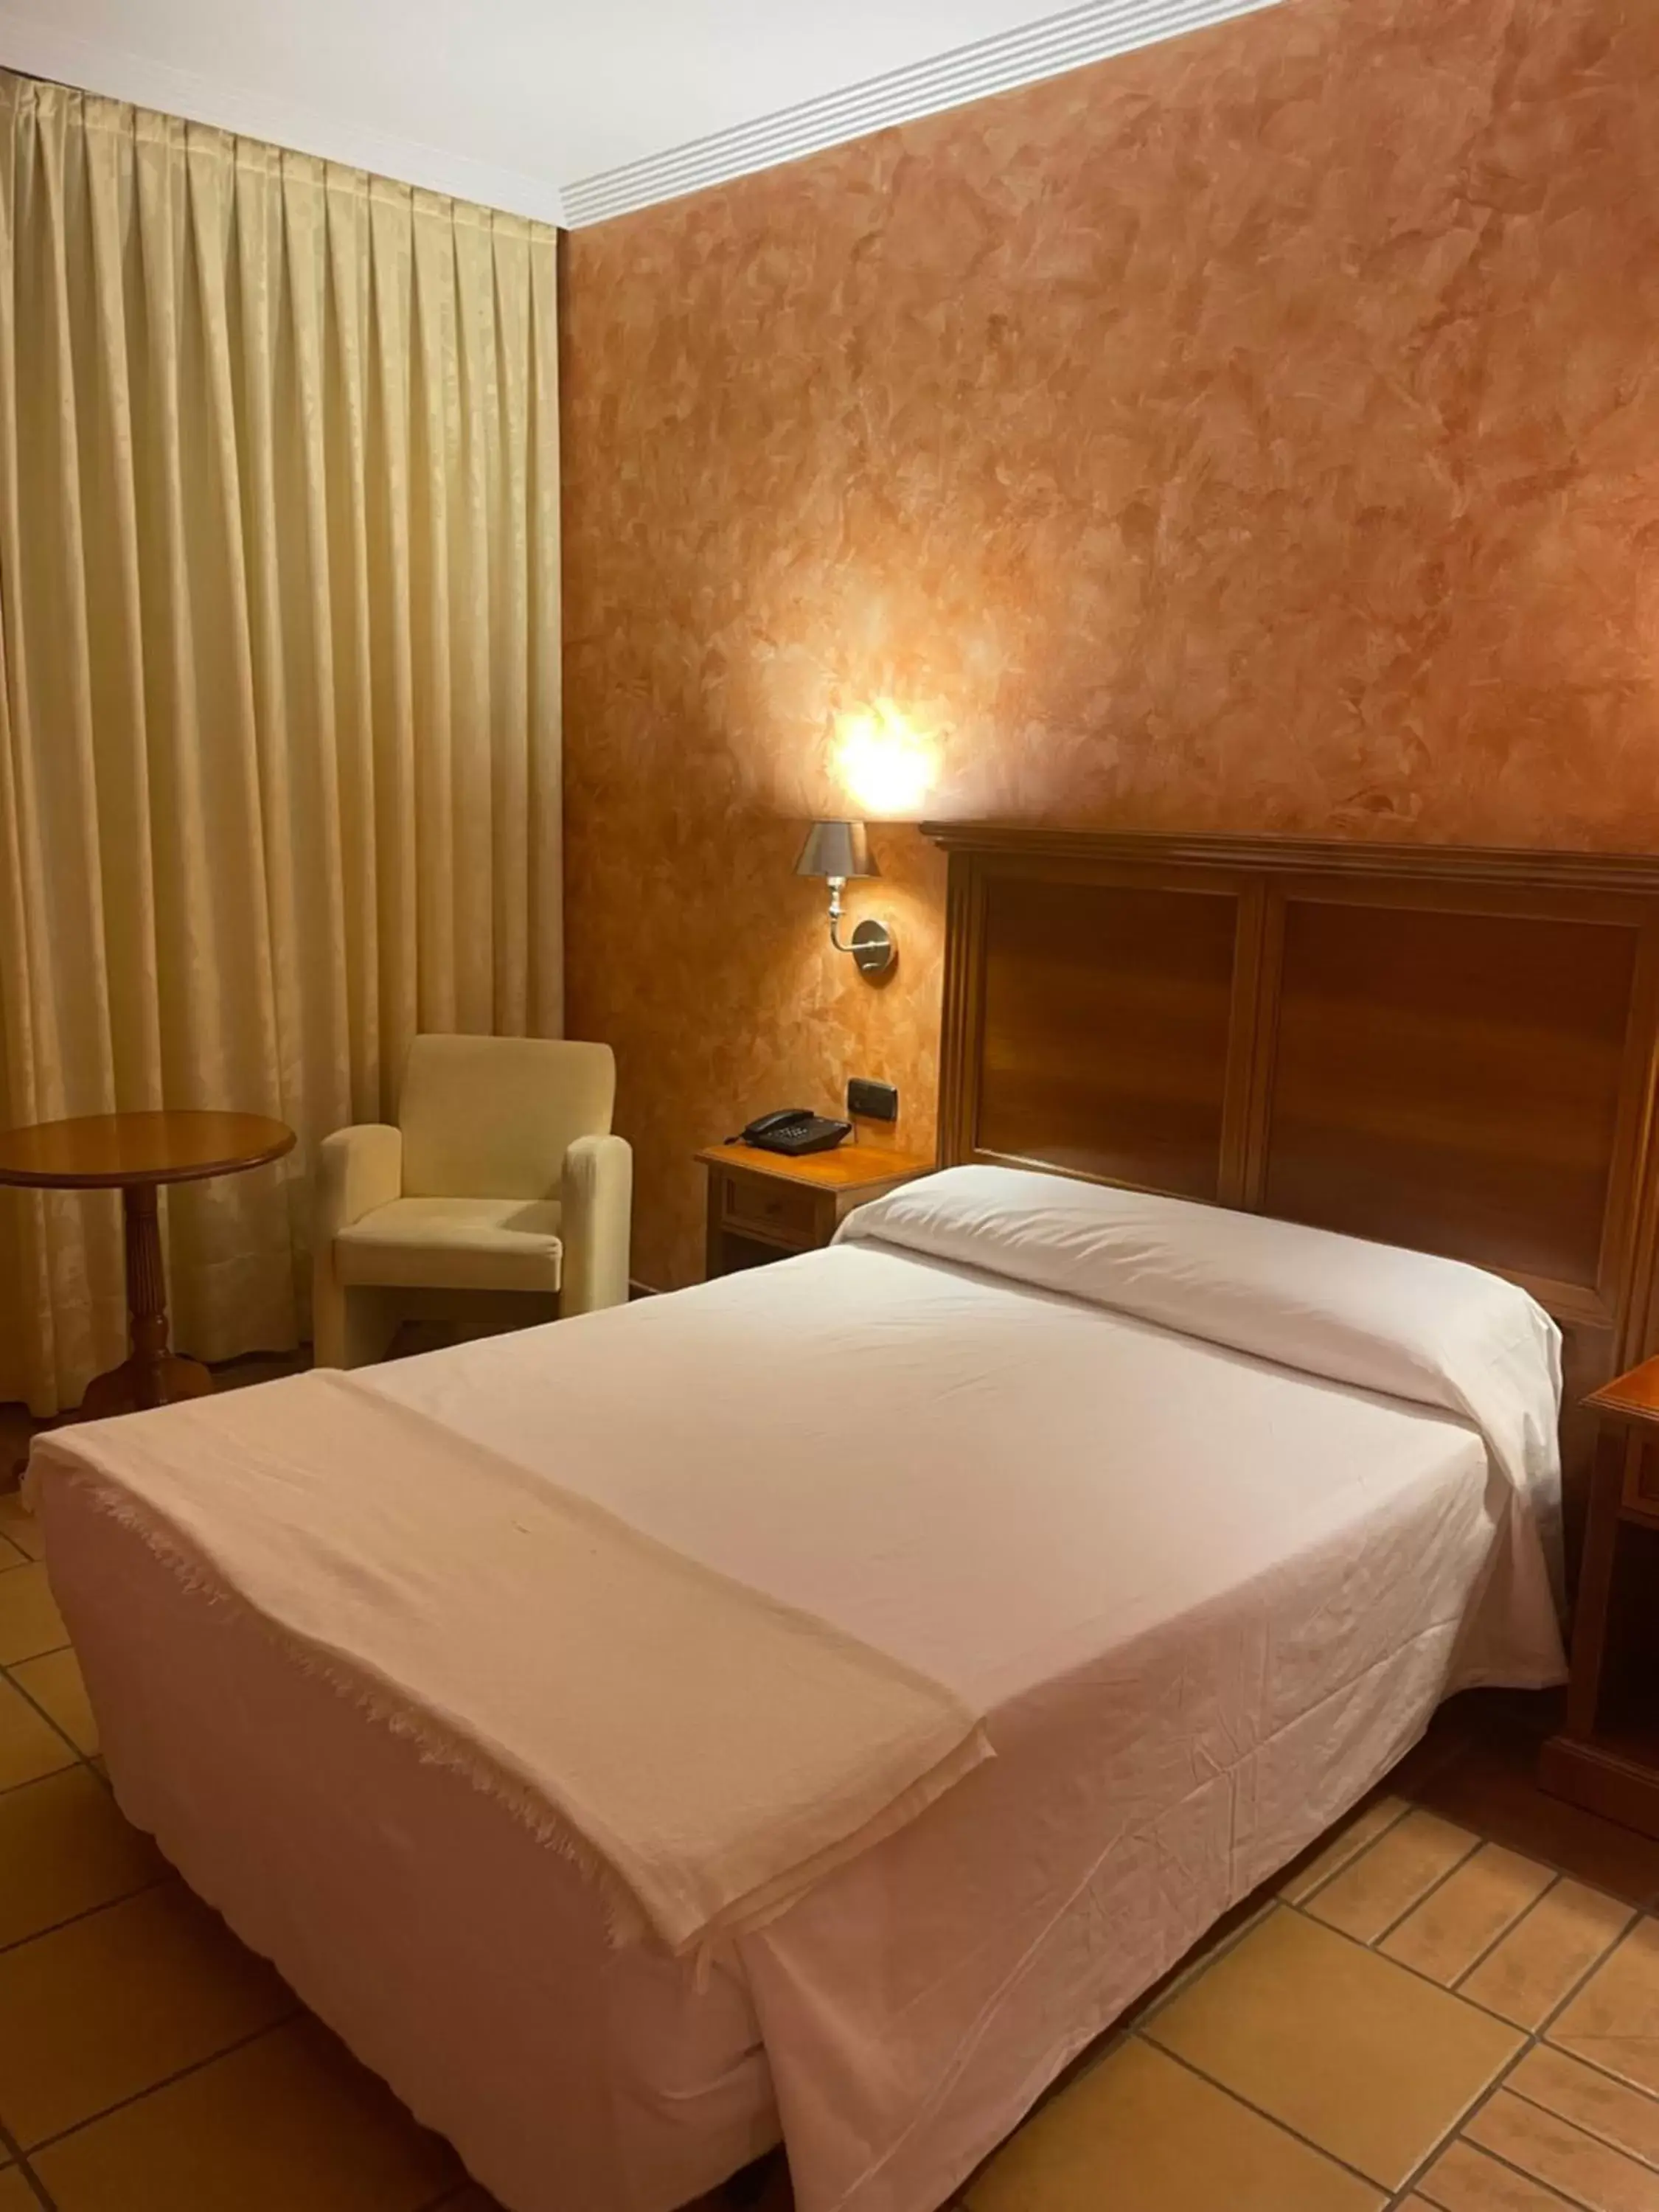 Bed in Hospedium Hotel Doña Mafalda de Castilla